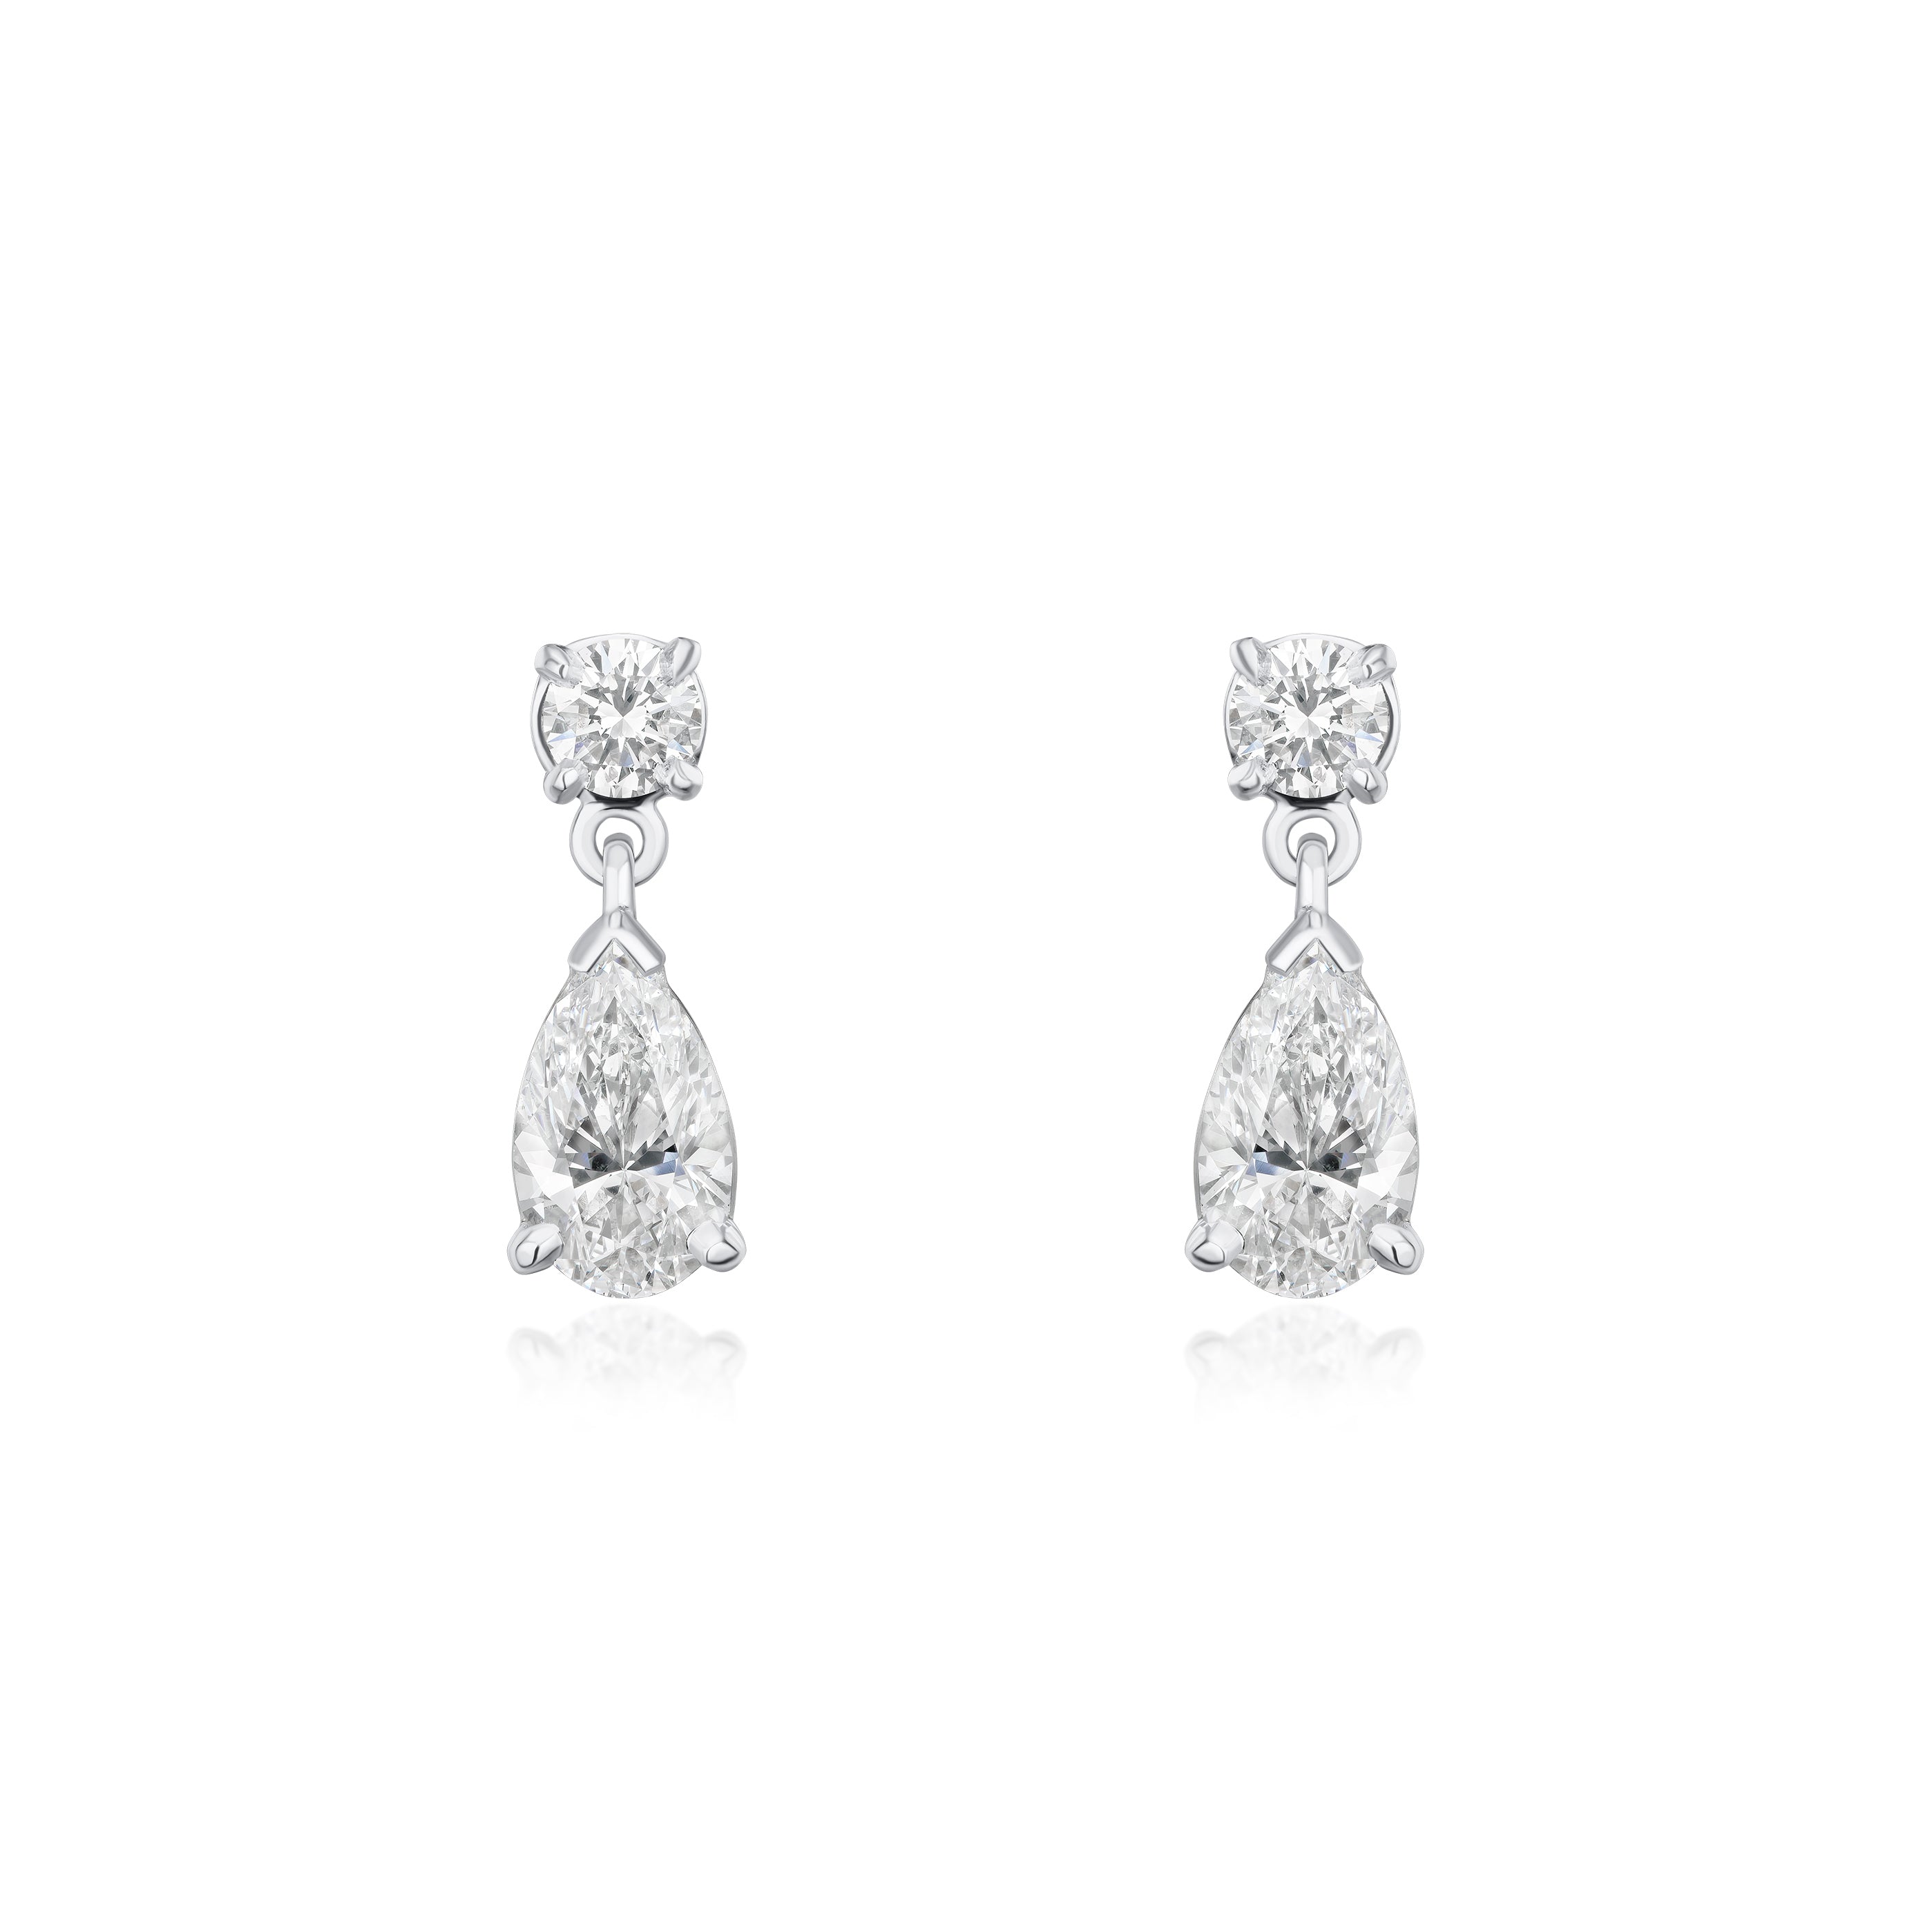 Pear shape and Round Brilliant Cut Diamond drop earrings